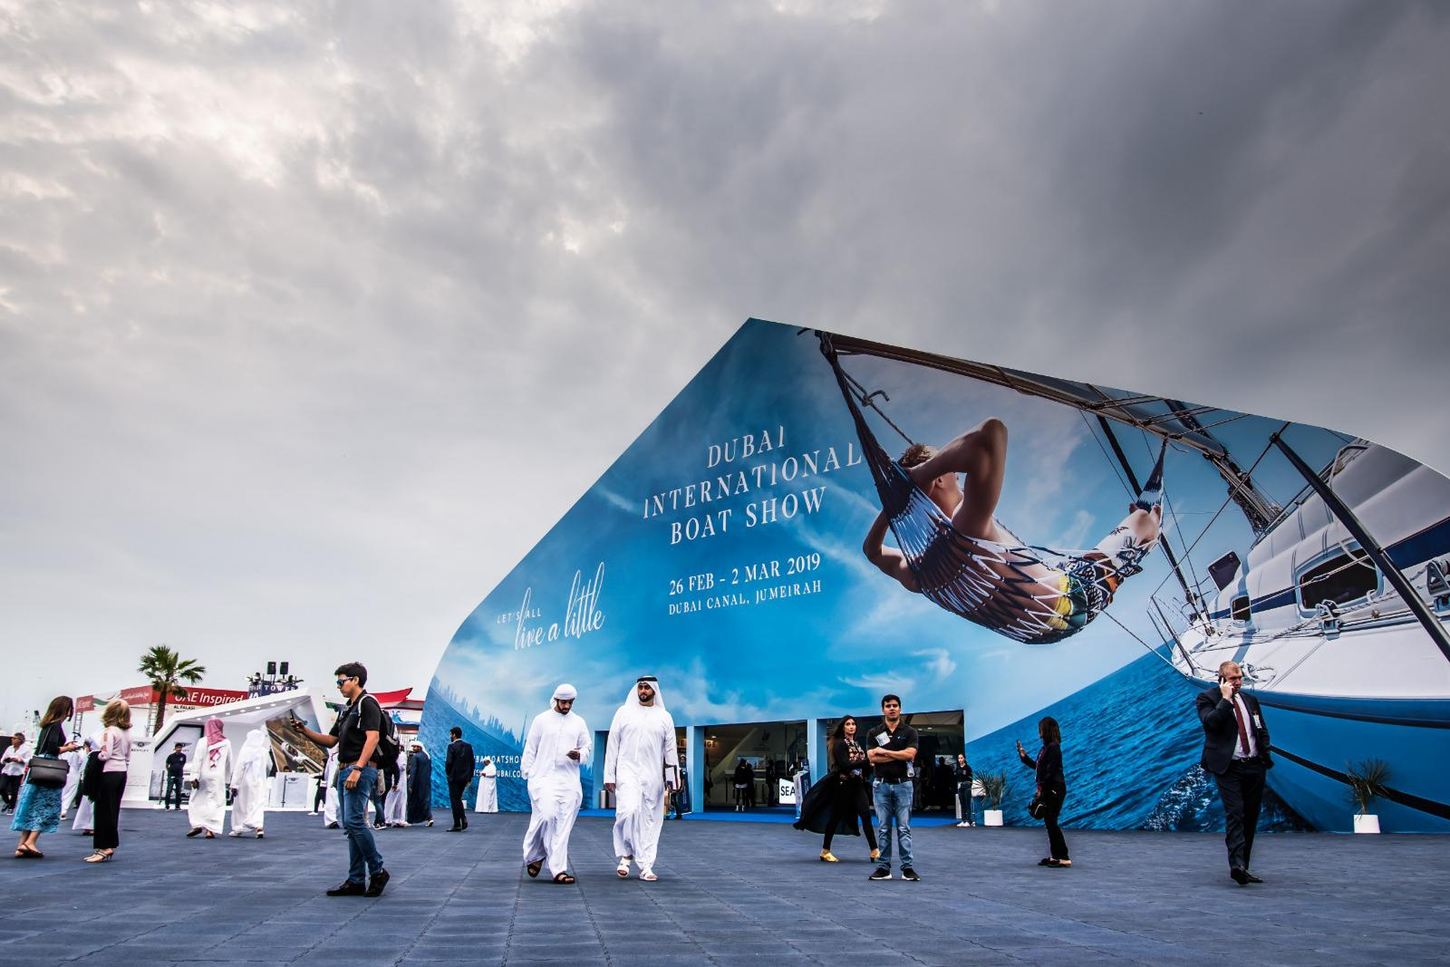 Video Highlights from the 2019 Dubai International Boat Show so far